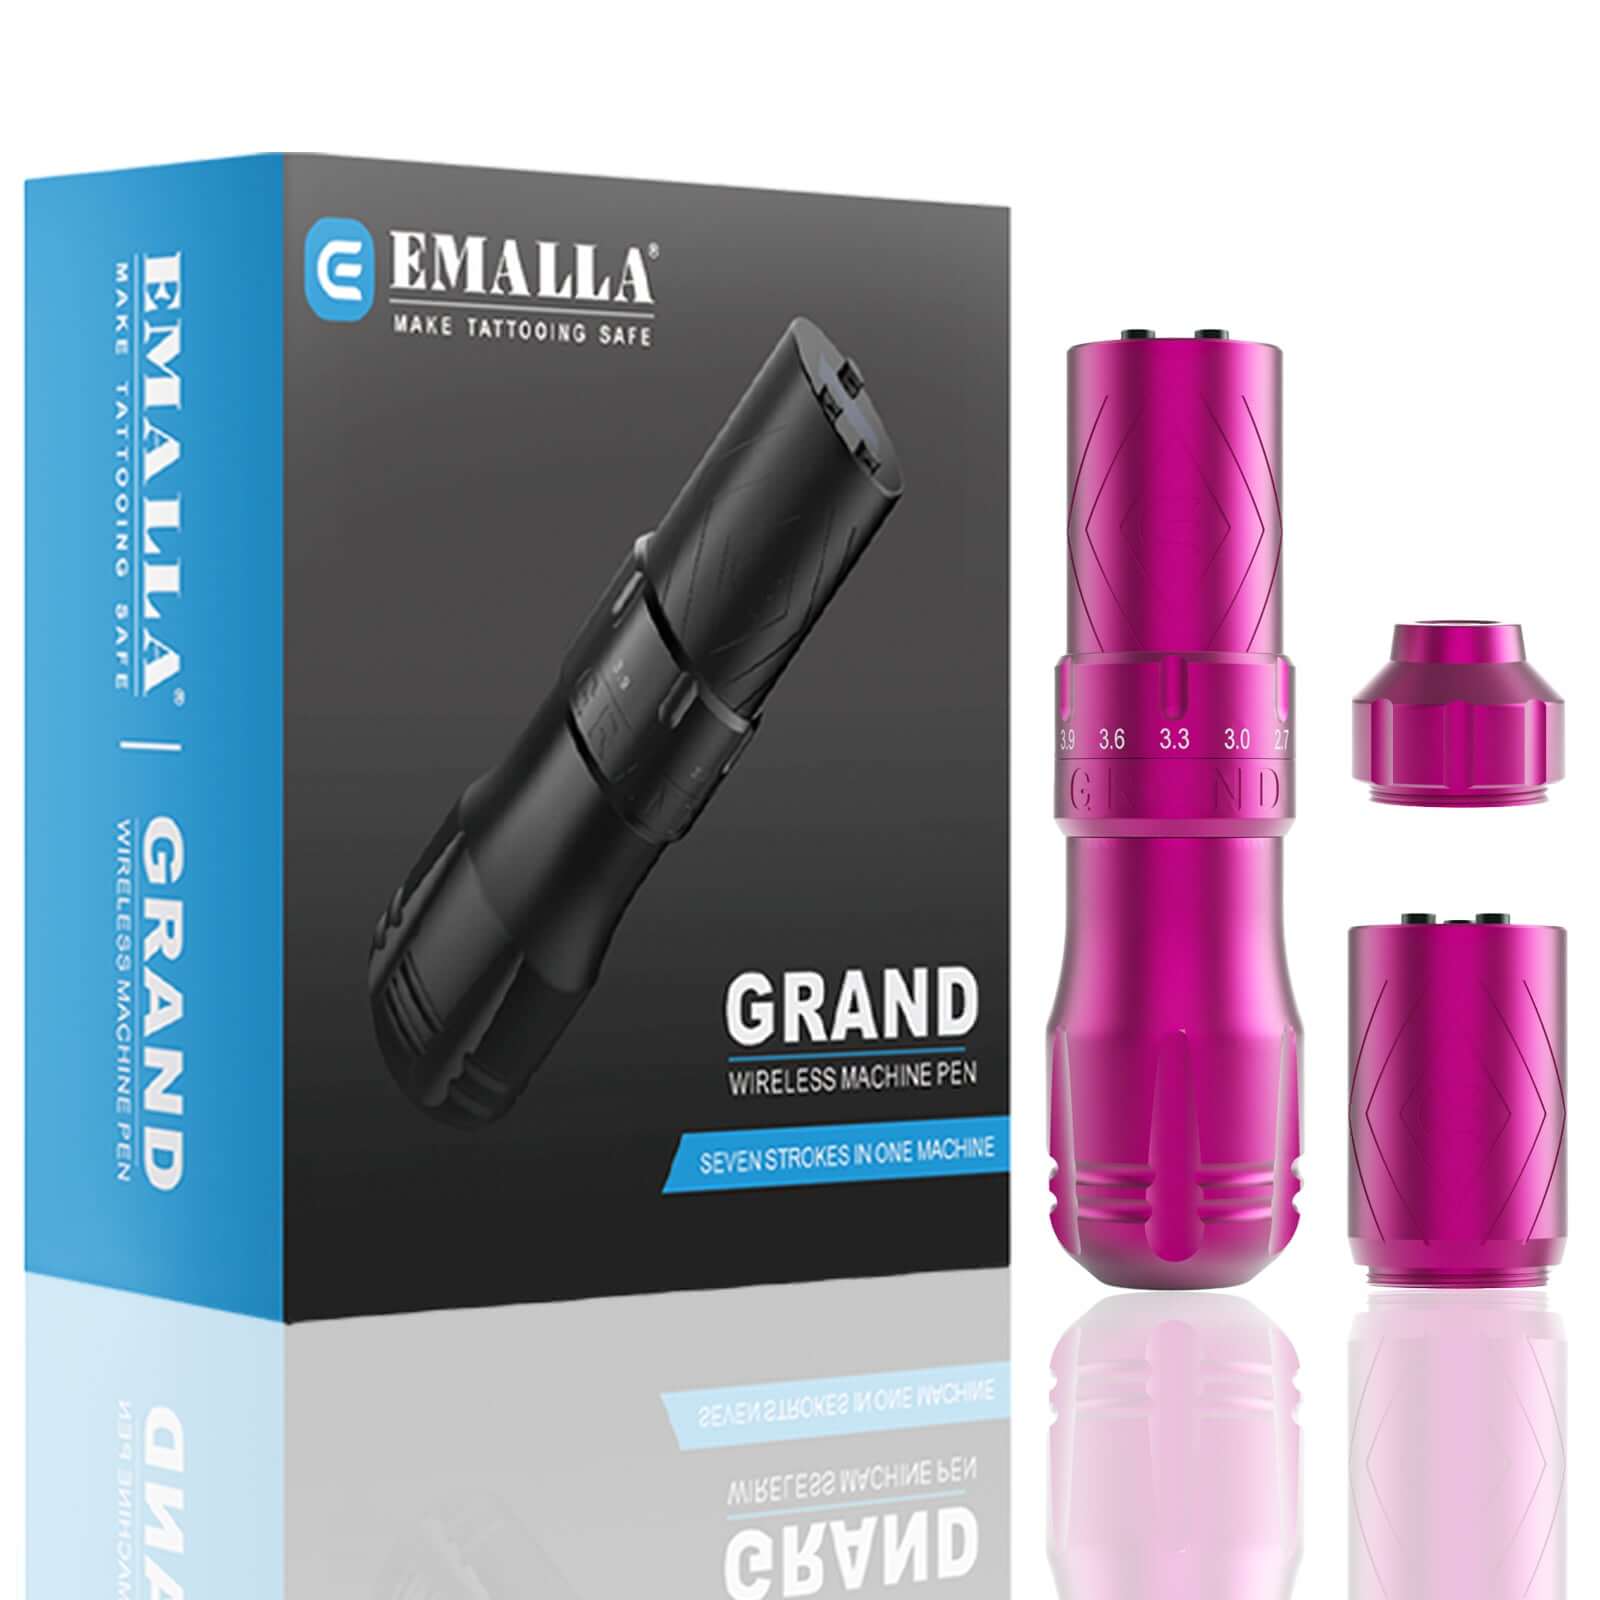 Package of EMALLA GRAND Wireless Tattoo Pen Machine (Pink)